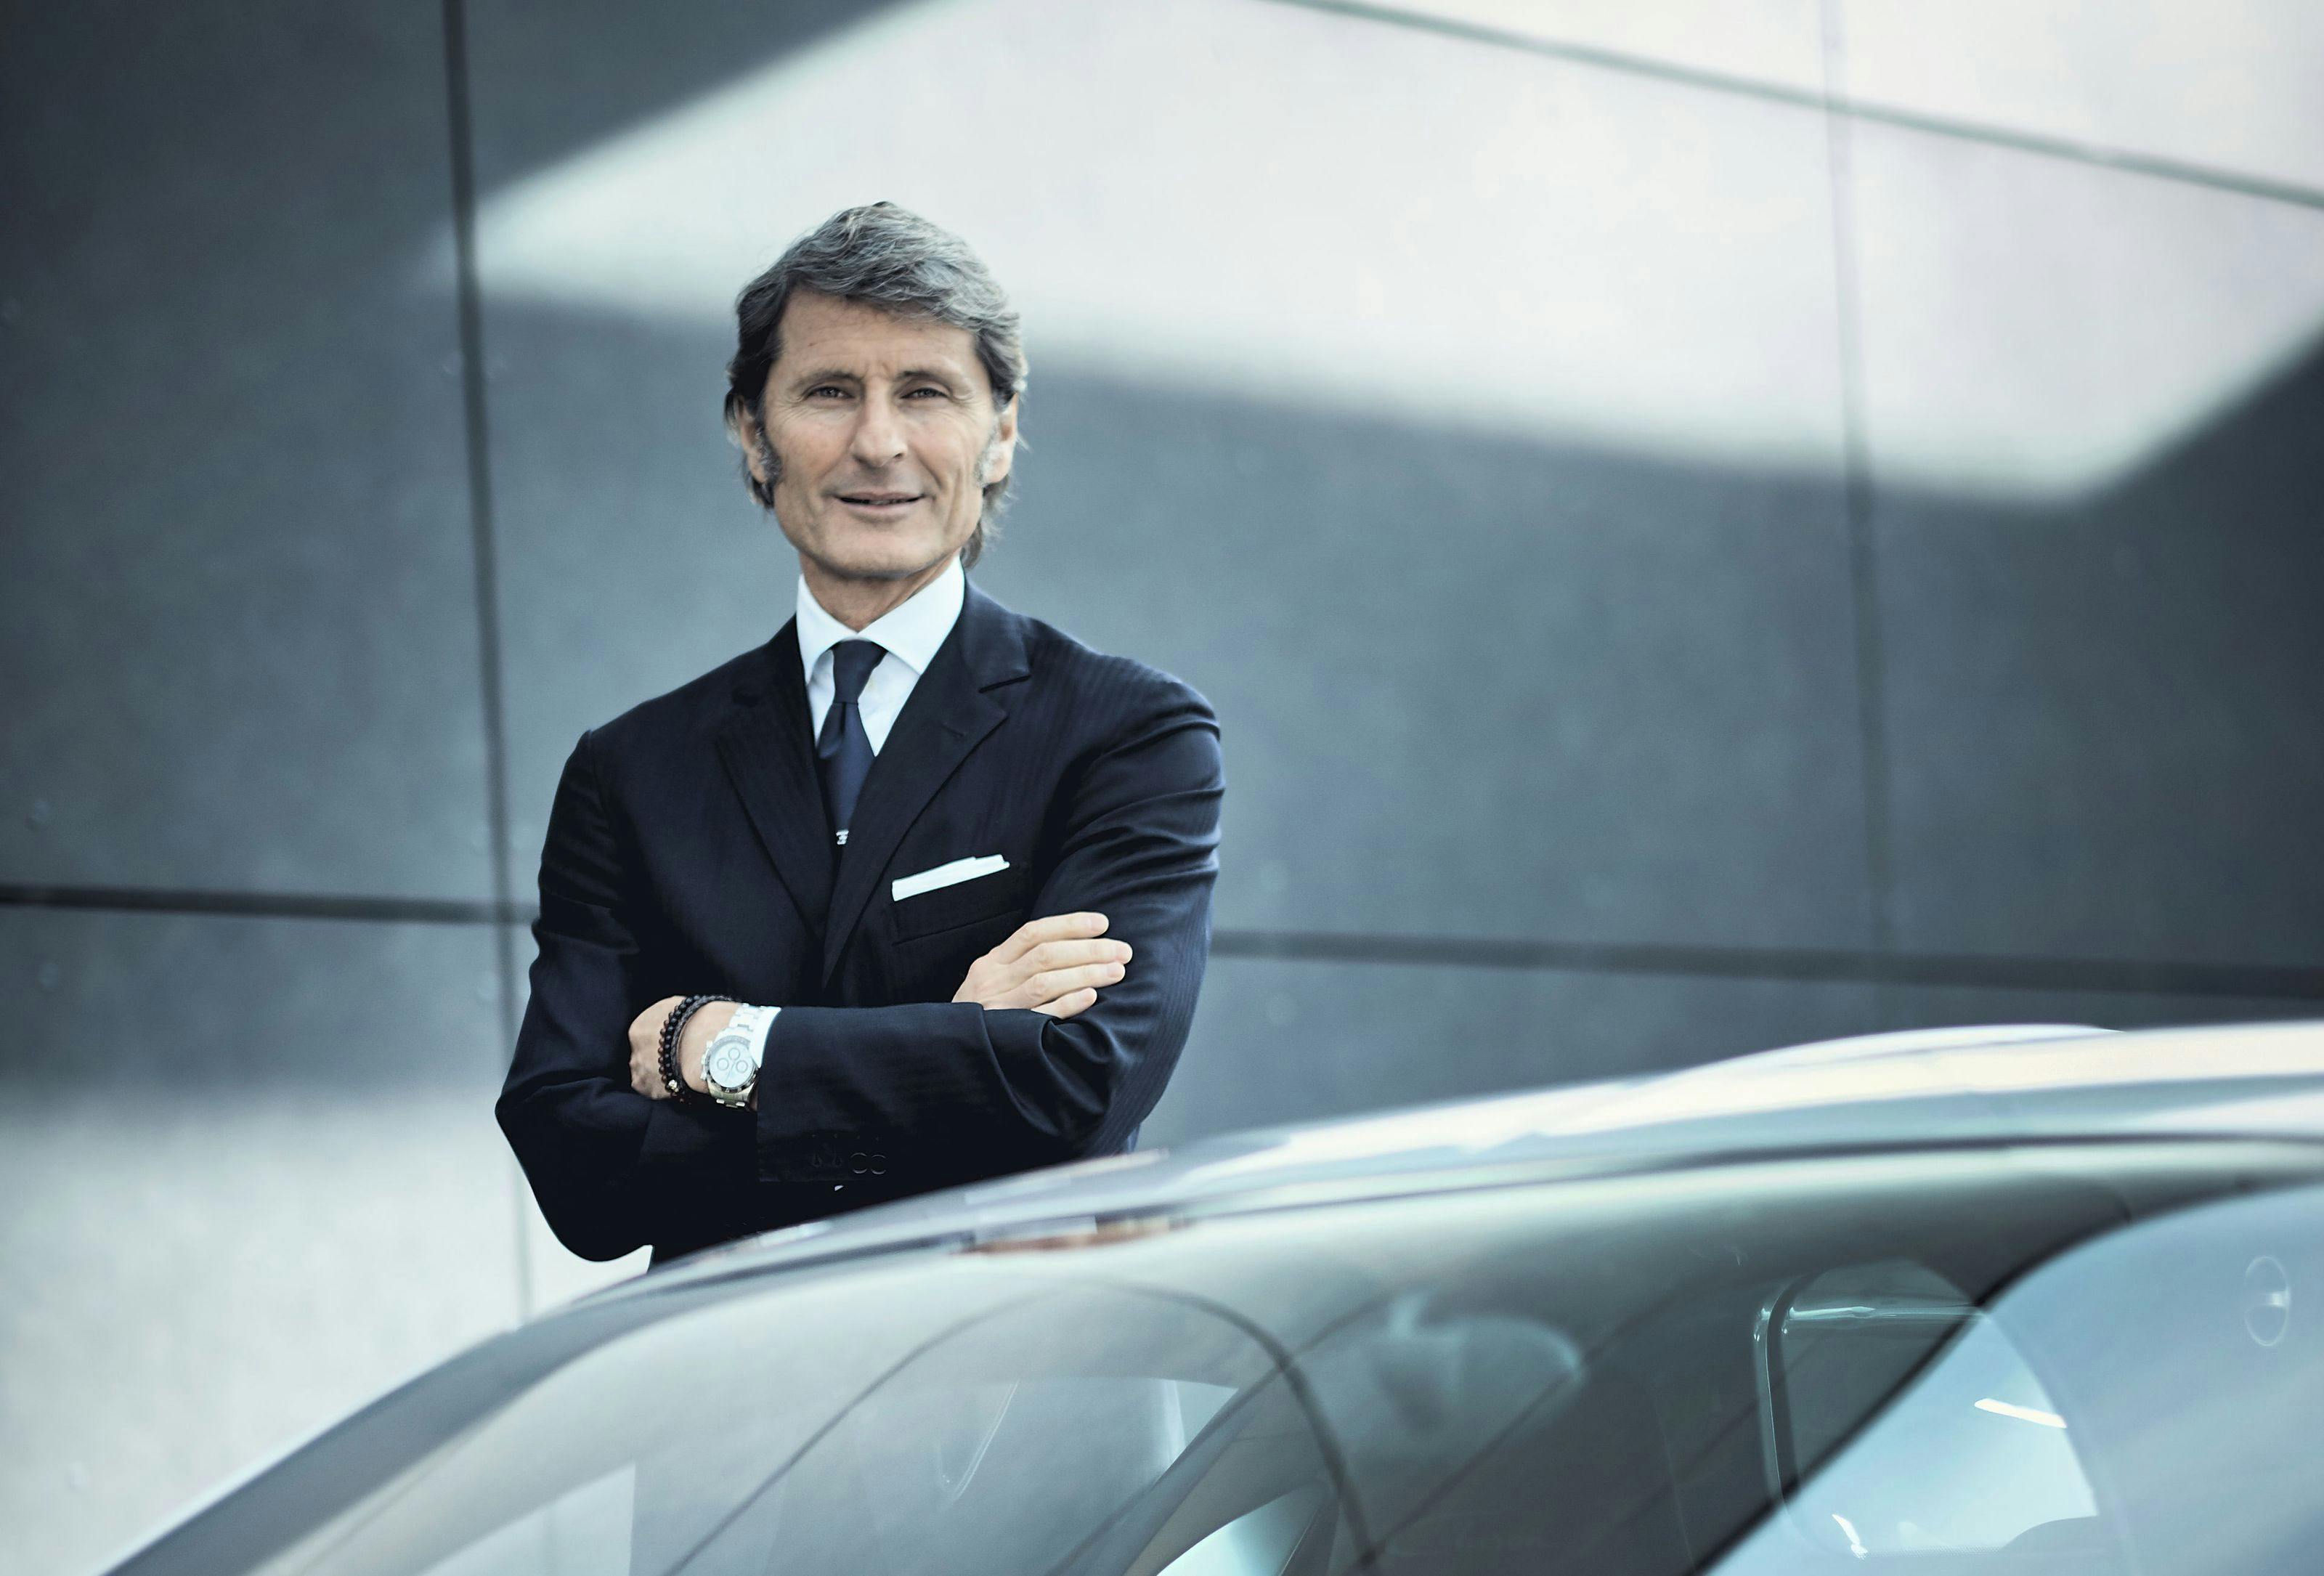 Review of the year by Bugatti President Stephan Winkelmann